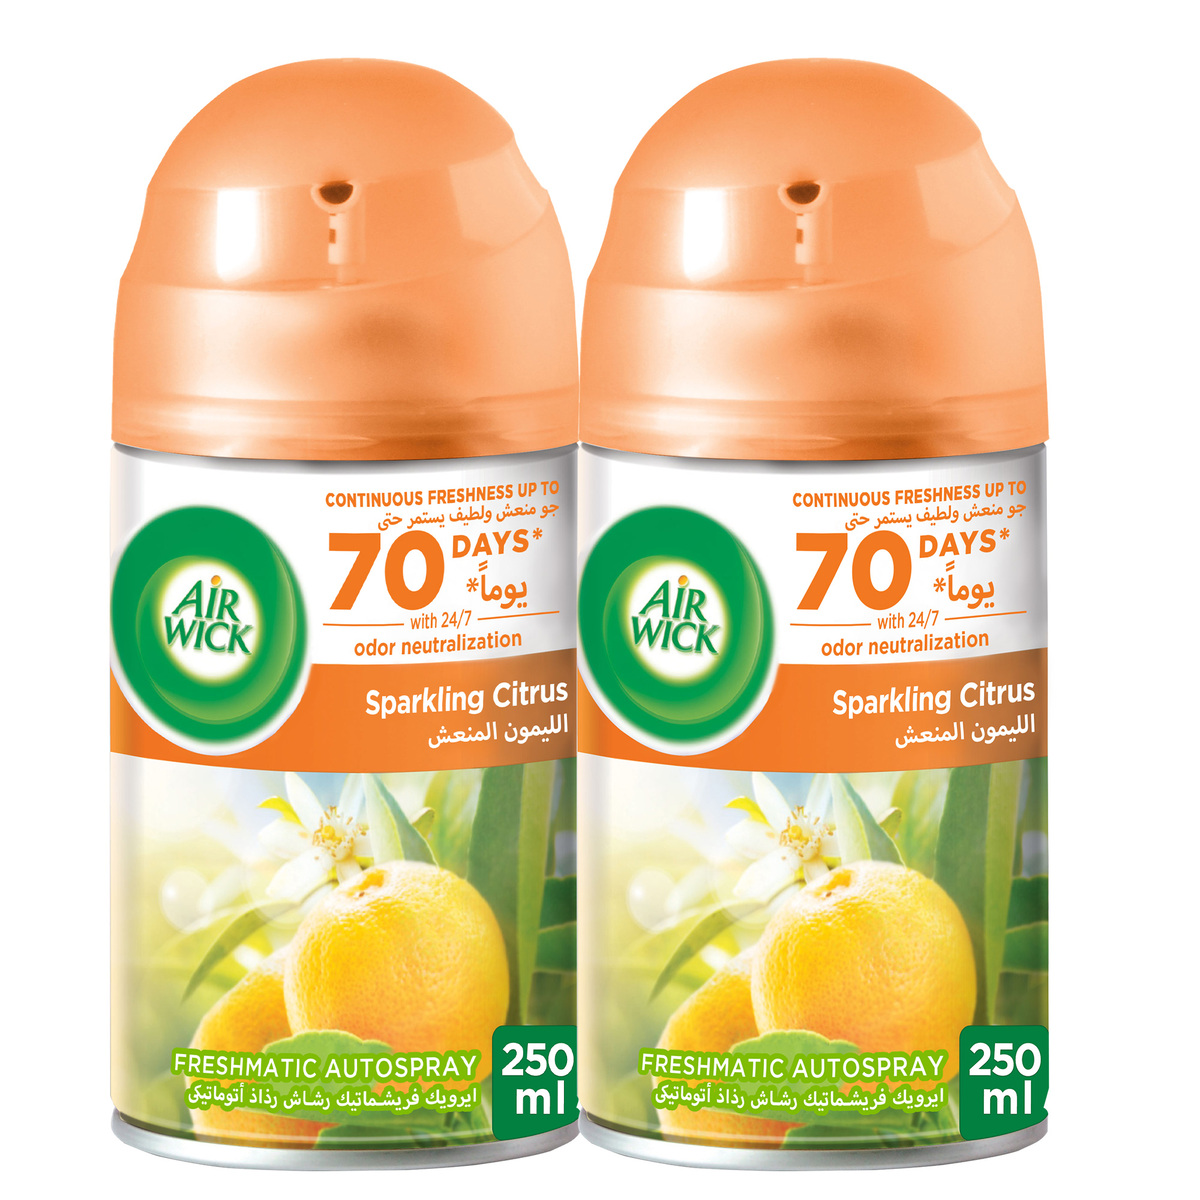 Airwick Air Freshener Freshmatic Refill Sparkling Citrus Value Pack 2 x 250 ml